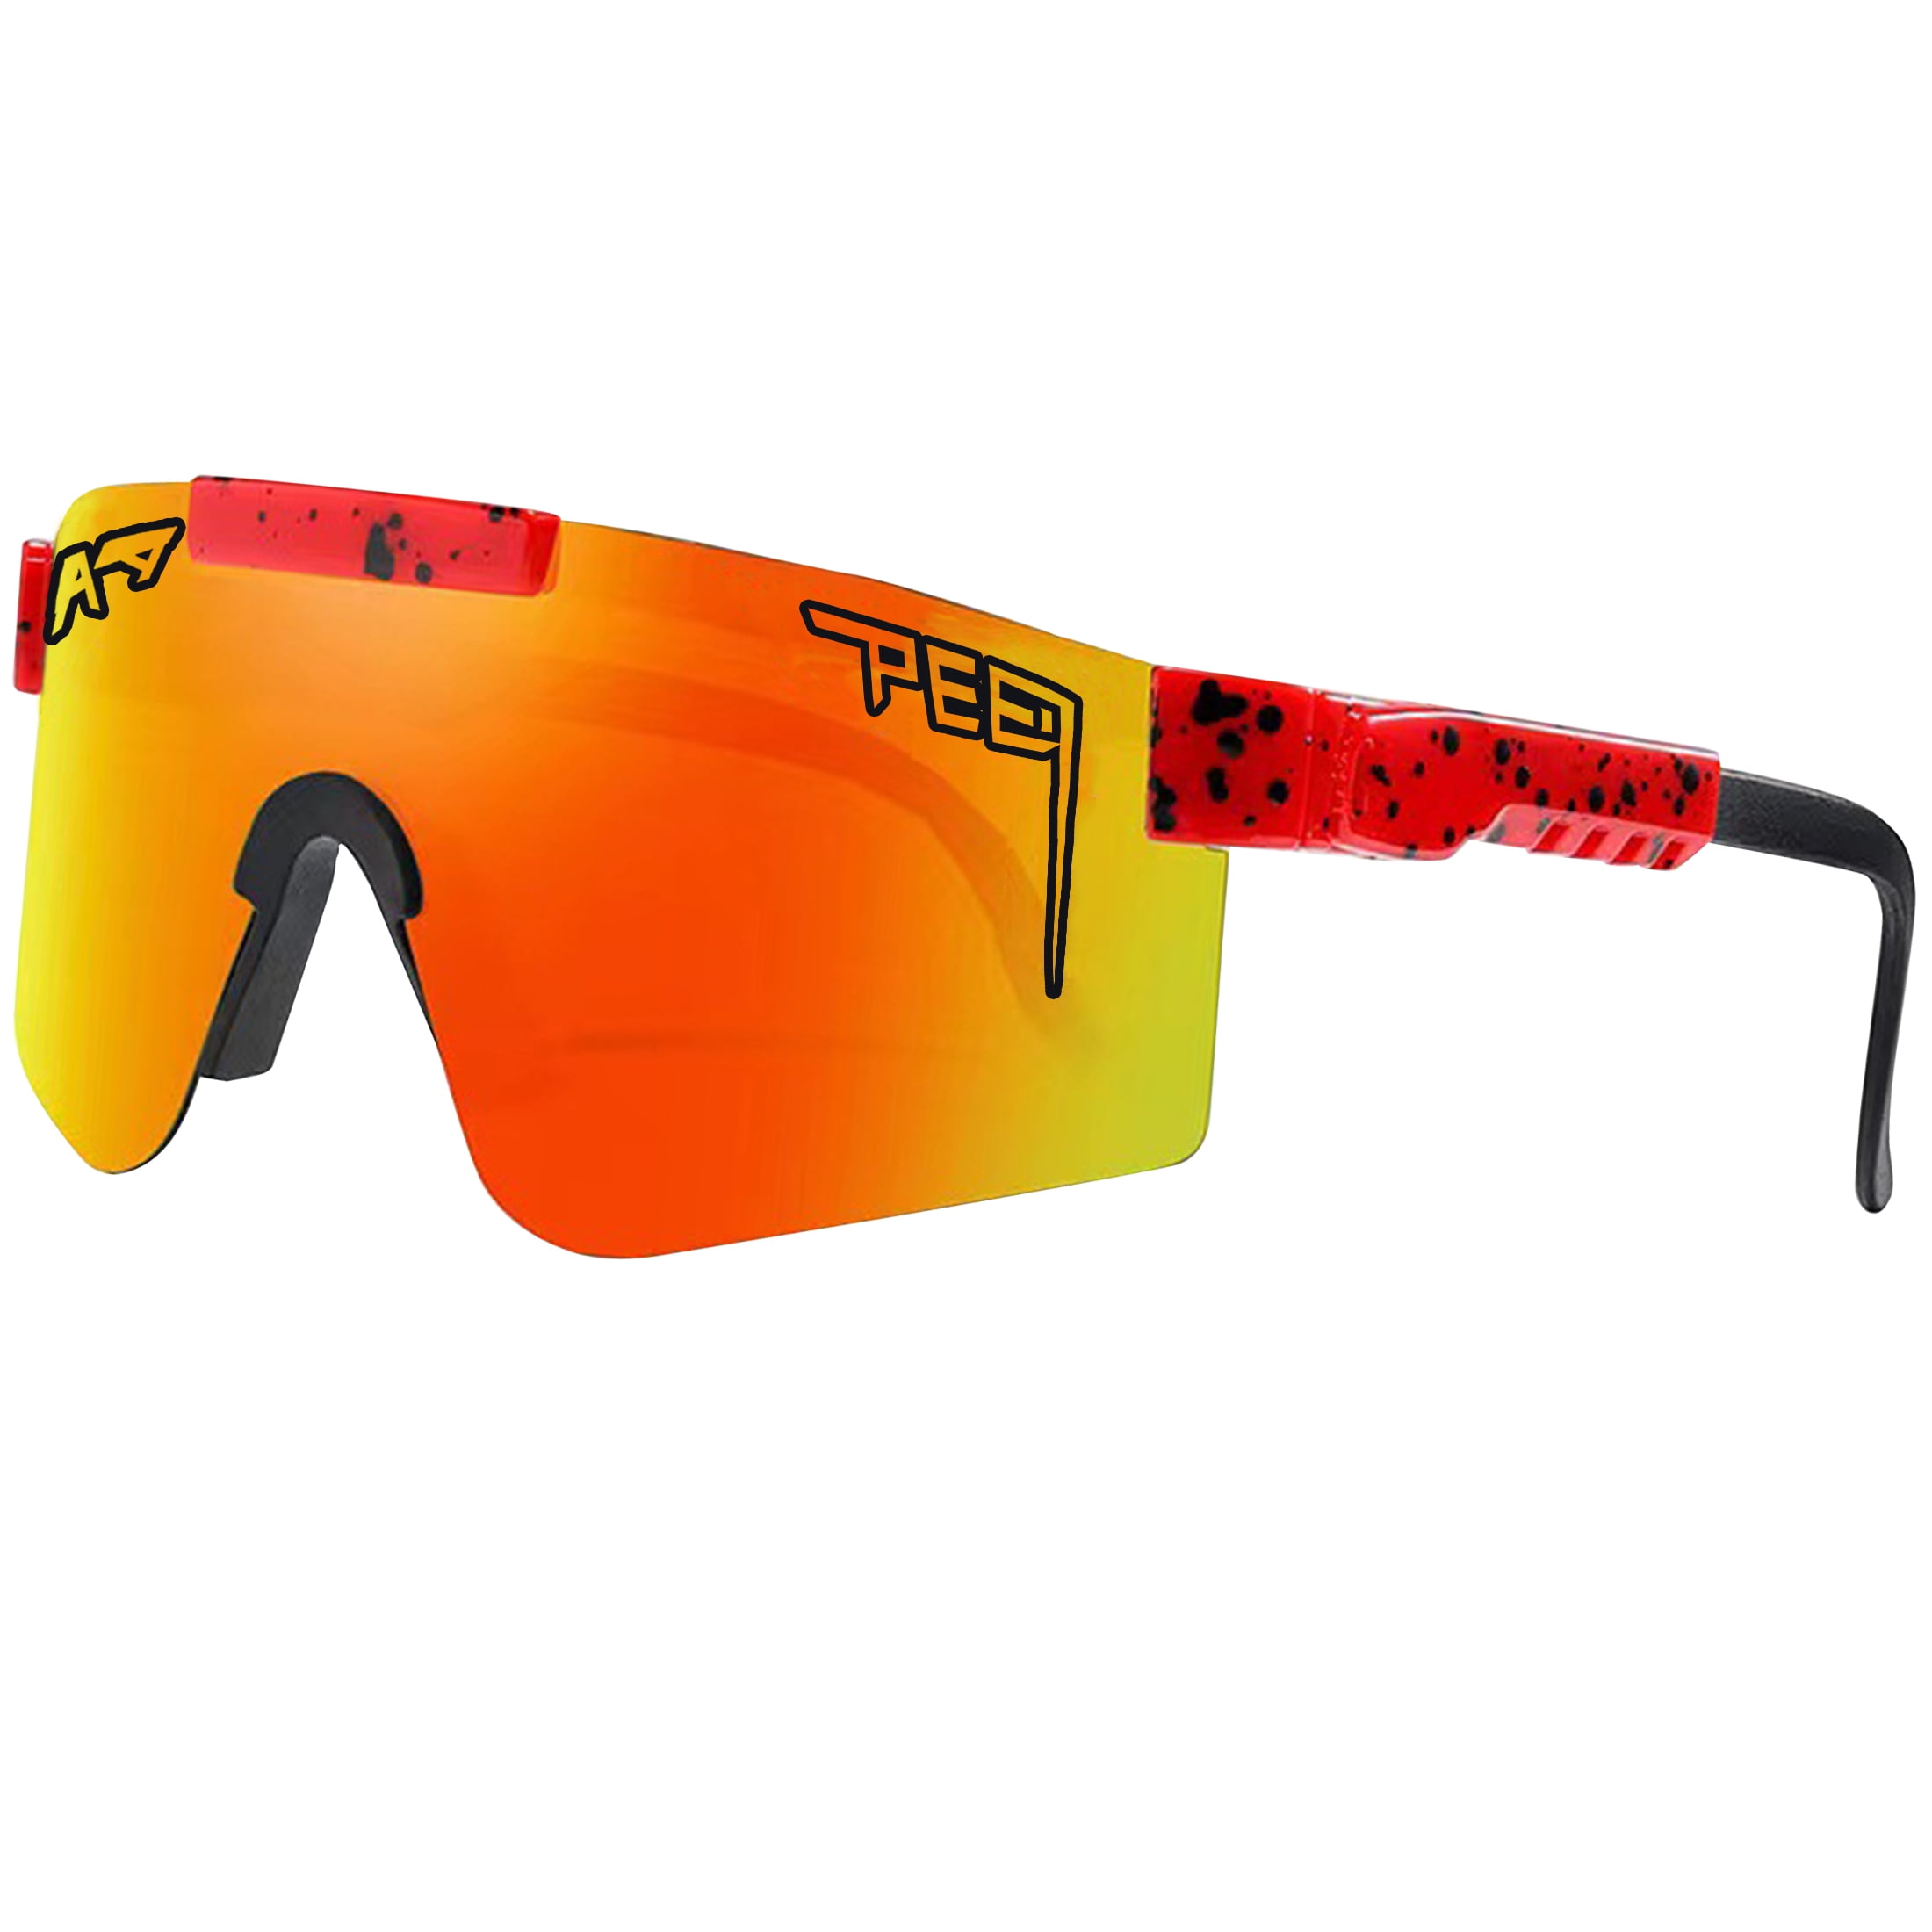  NACHLYNN 2 Pack Polarized Sport Sunglasses for Men Women  Cycling Fishing Running Shades Sunglasses : Sports & Outdoors